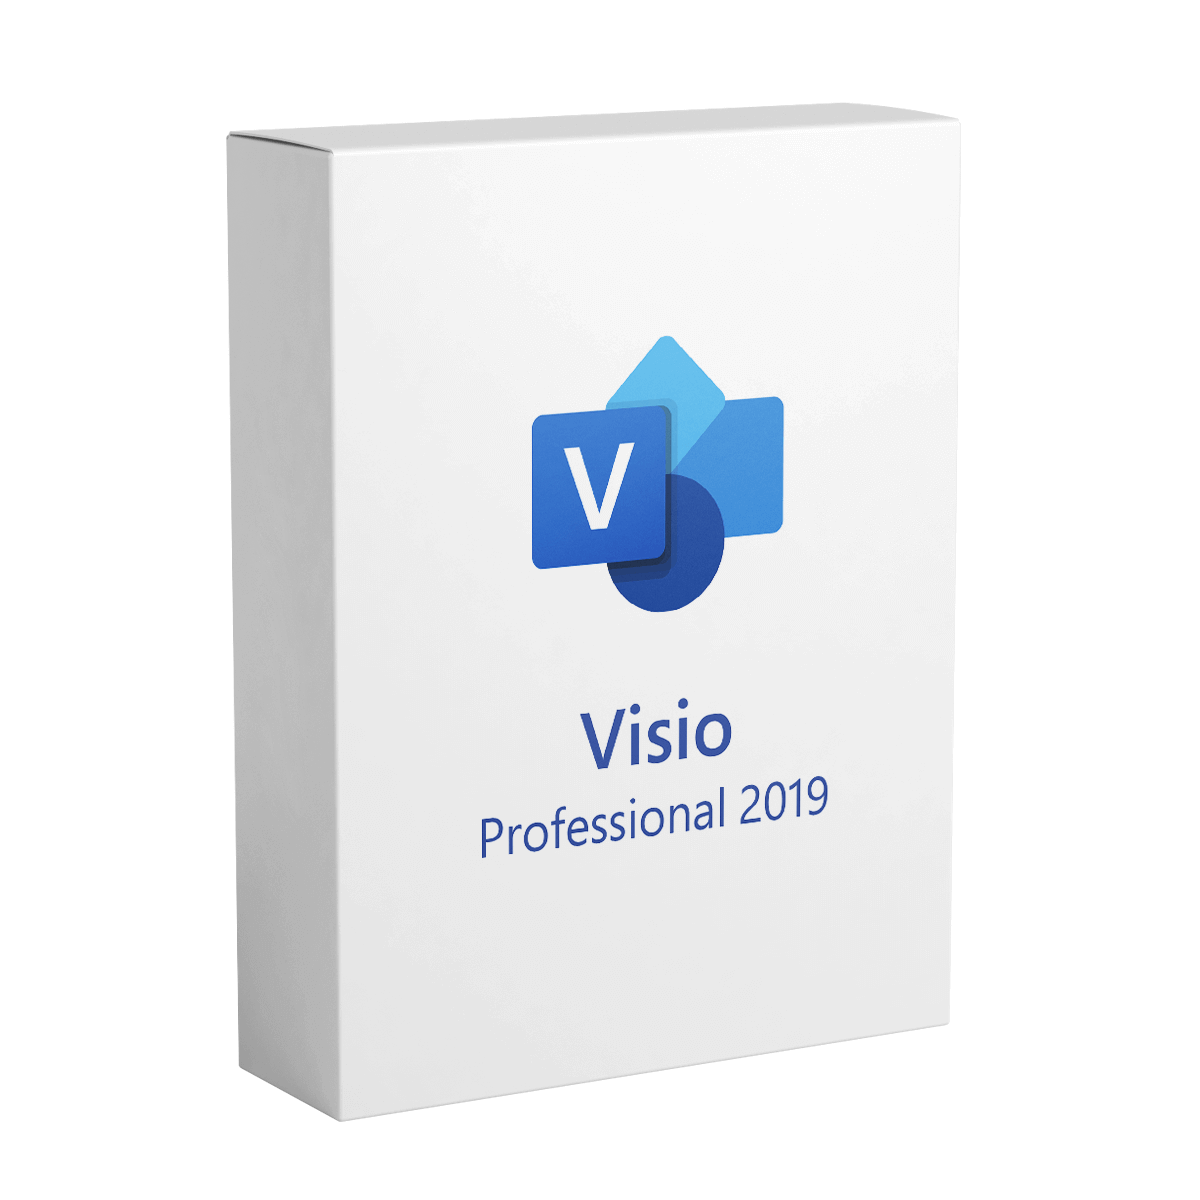 Visio Professional 2019 - Lifetime License for 1 PC